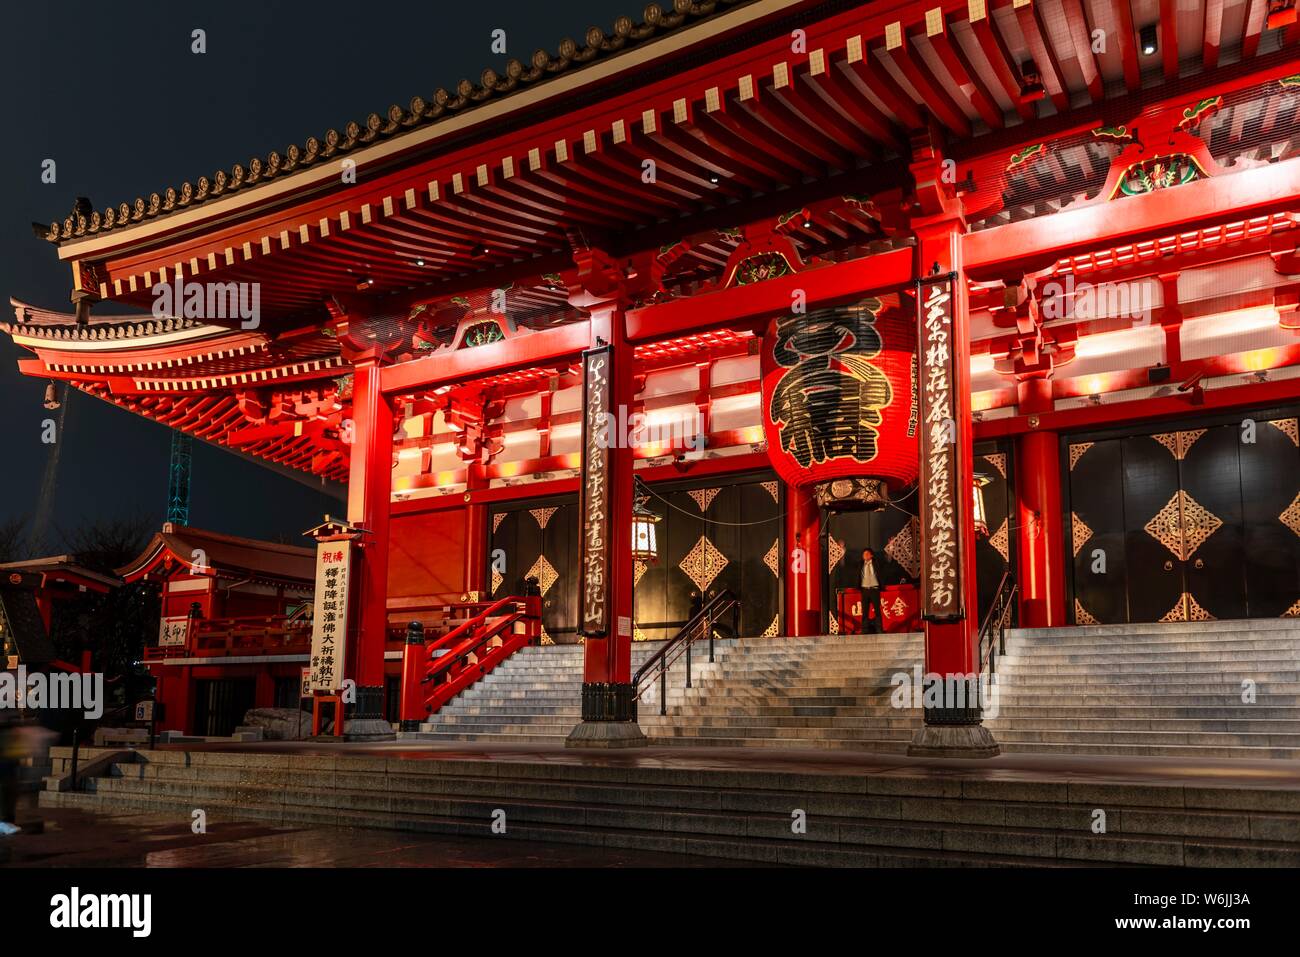 Nacht Foto, Treppe zum Eingang, buddhistische Tempel Komplex, Senso-ji in Asakusa Tempel oder Schrein, Asakusa, Tokyo, Japan Stockfoto